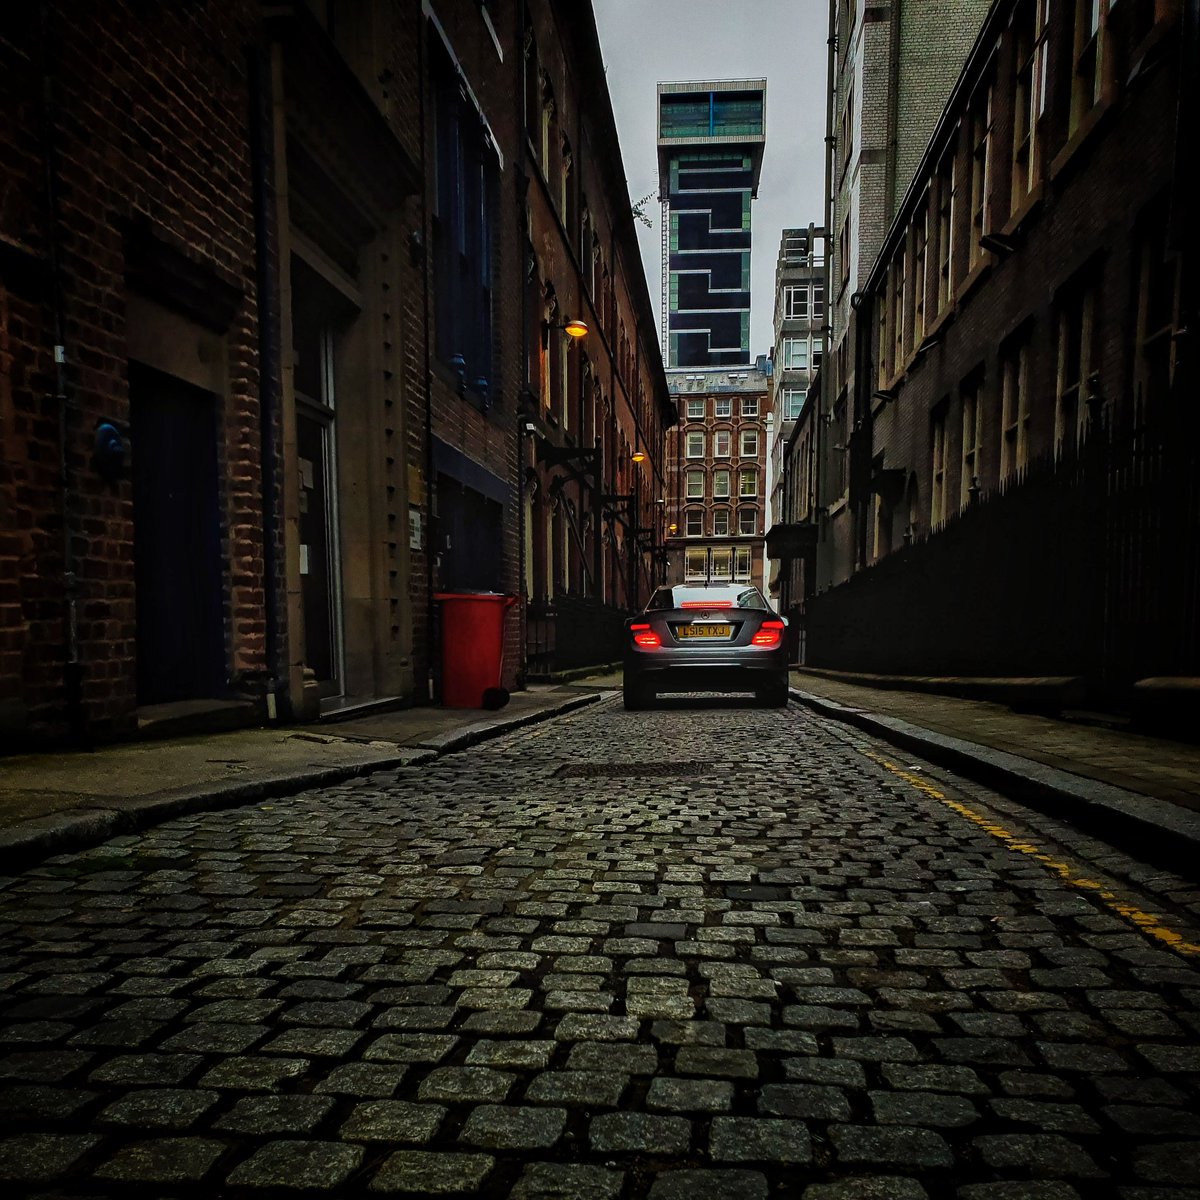 Liverpool Ormond Street

#Liverpool #Liverpoolcitycentre #exchangeflags